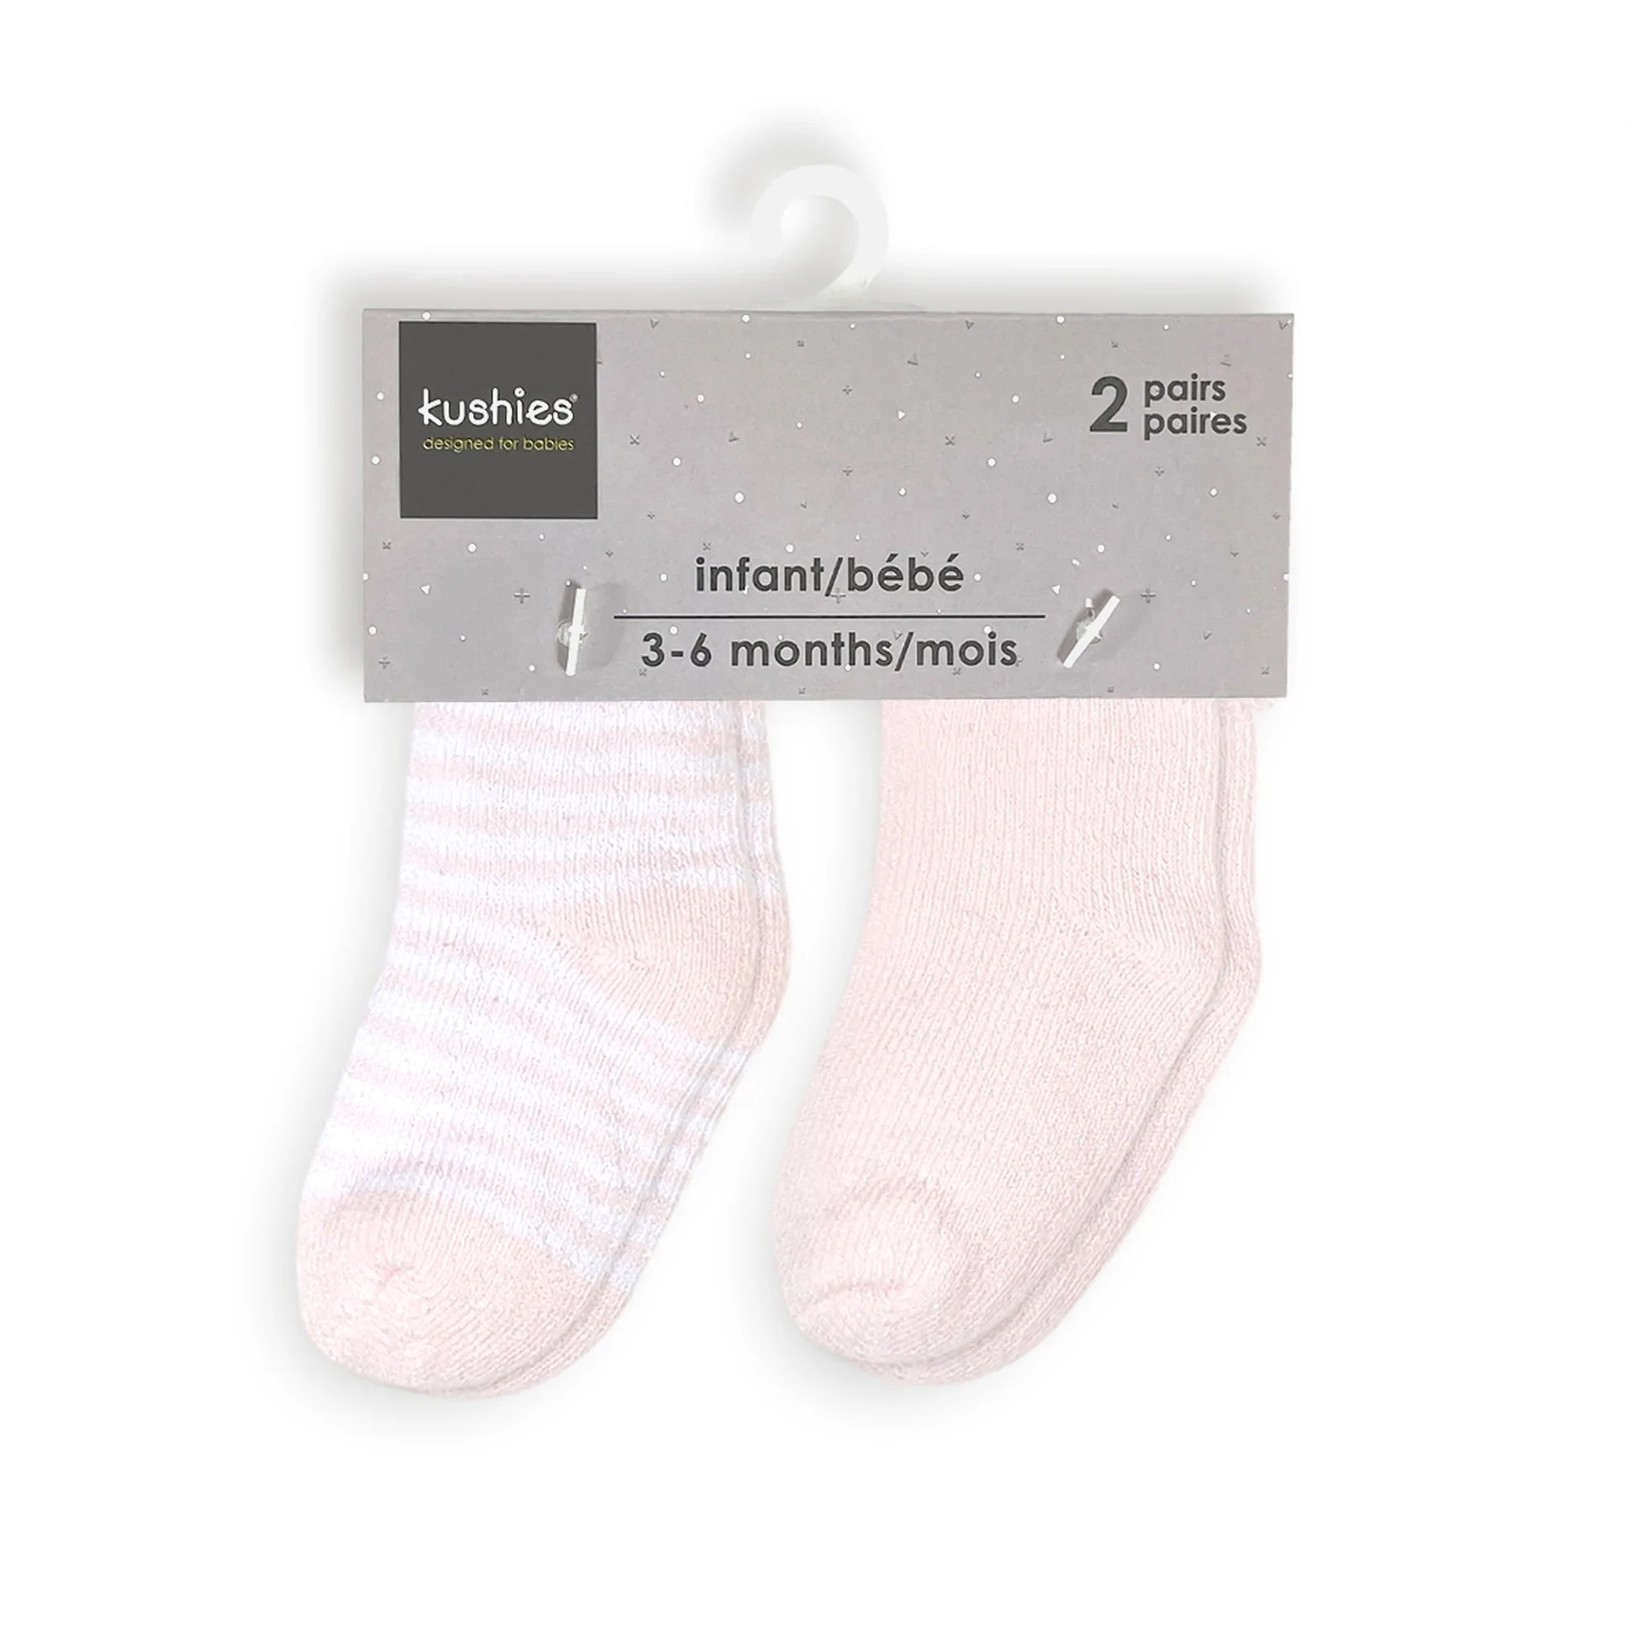 Kushies Kushies Infant Socks 2pk Pink/Stripes